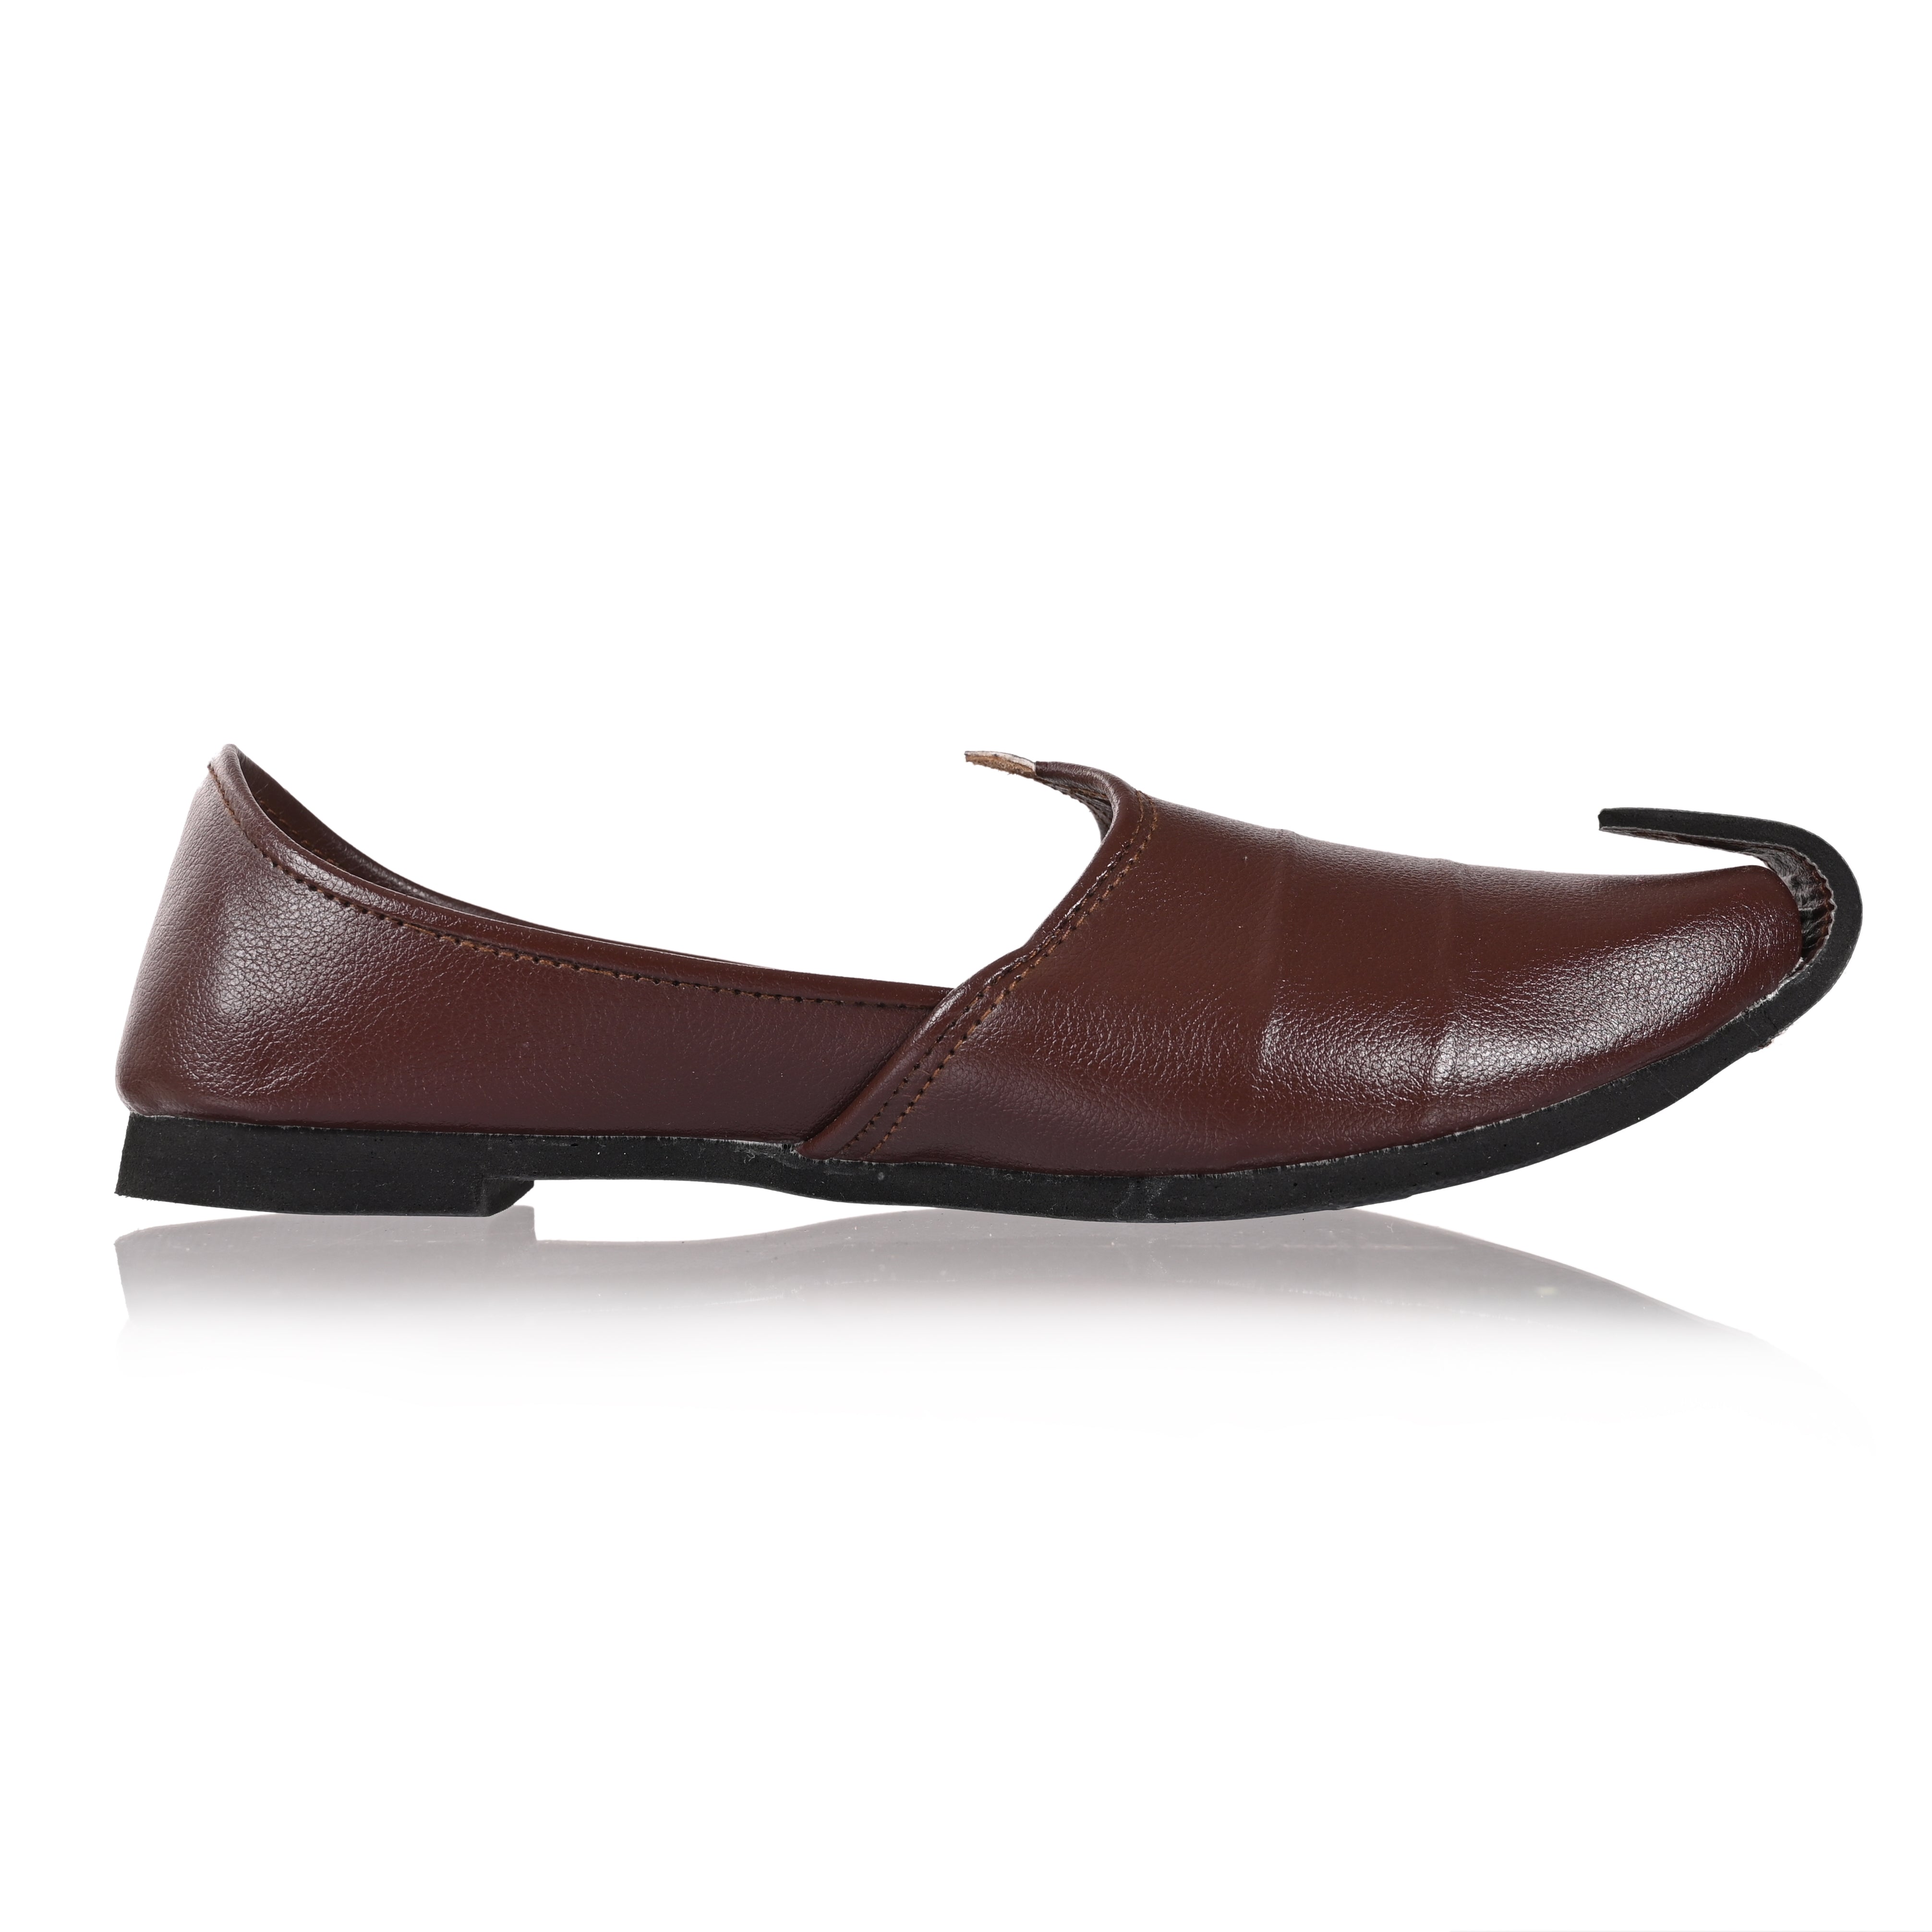 Brown Leather Mojari / Slip on with self Stripes for Men